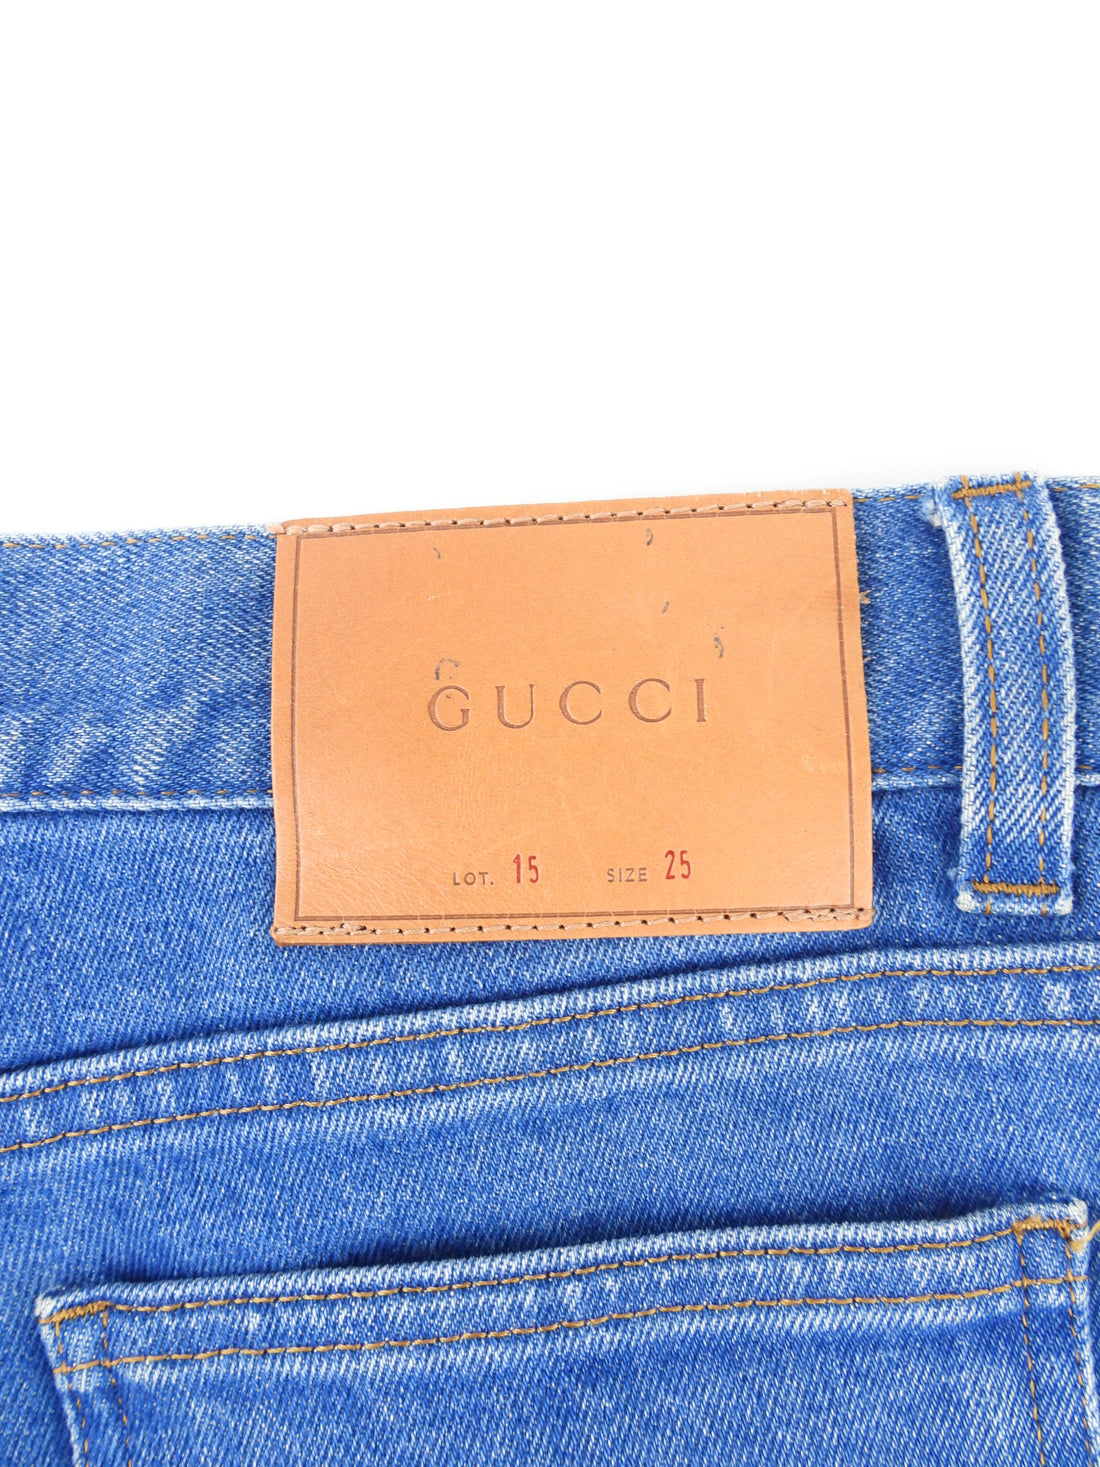 Gucci Blue Denim Silver Floral Embroidered Jeans - 25 – I MISS YOU VINTAGE